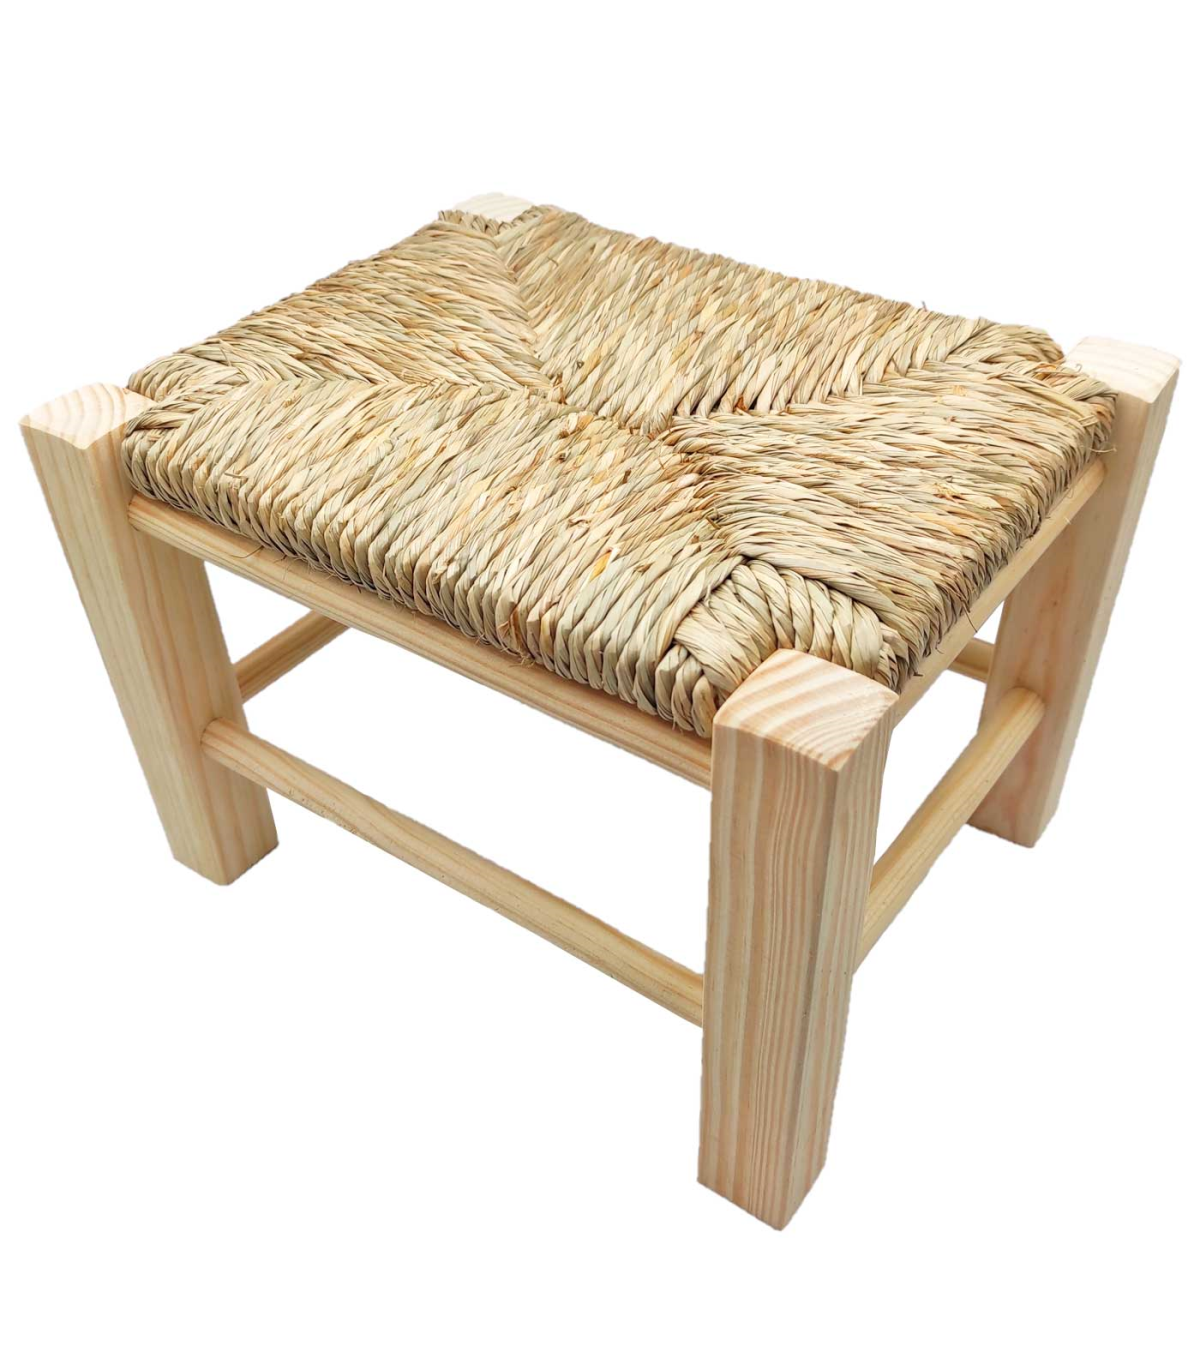 Tradineur - Taburete infantil de madera con asiento de rafia